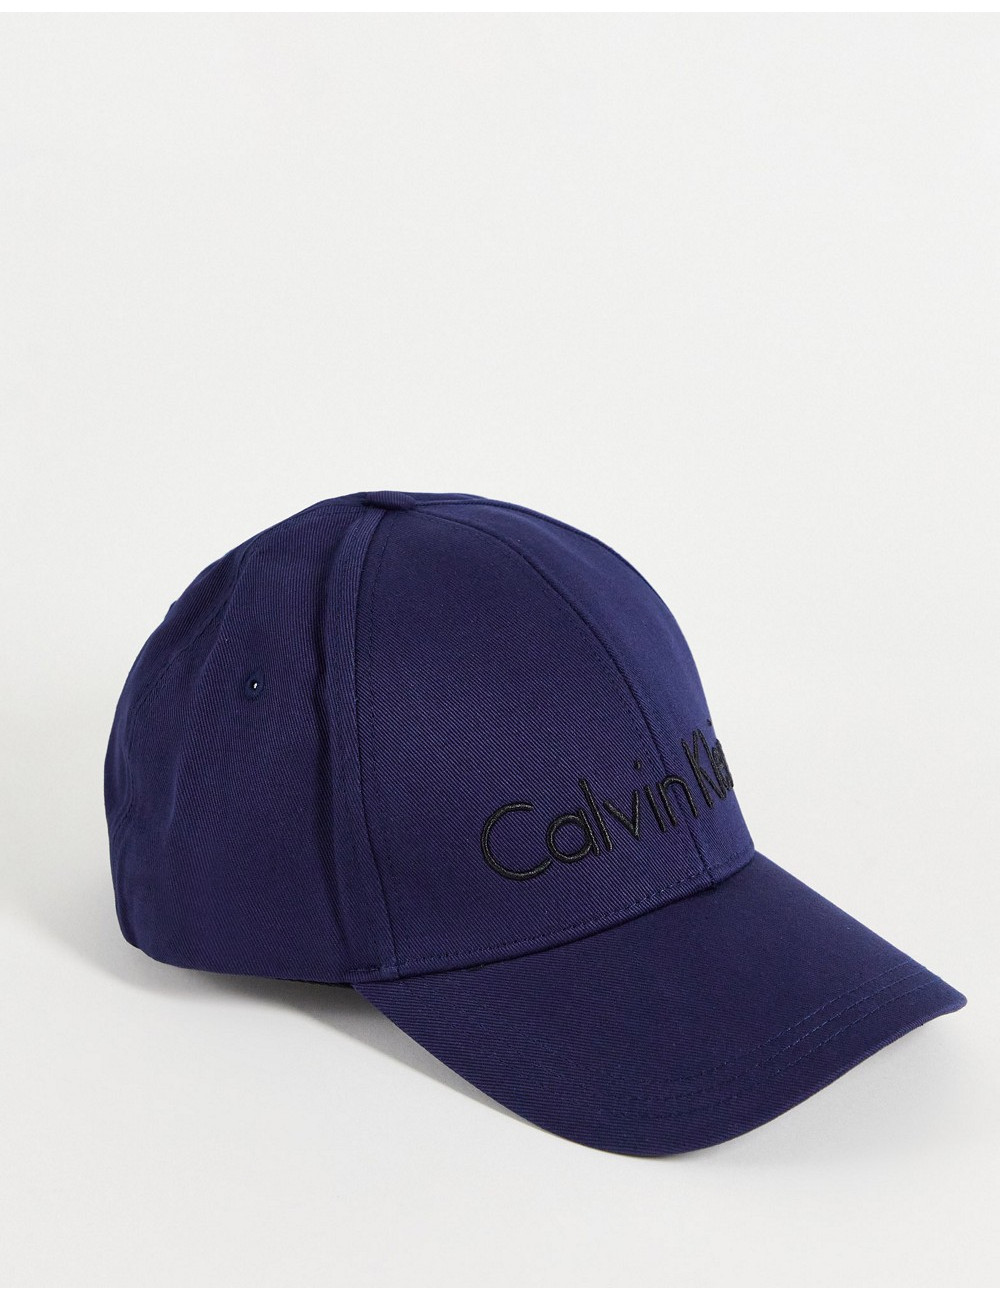 Calvin Klein logo cap in navy